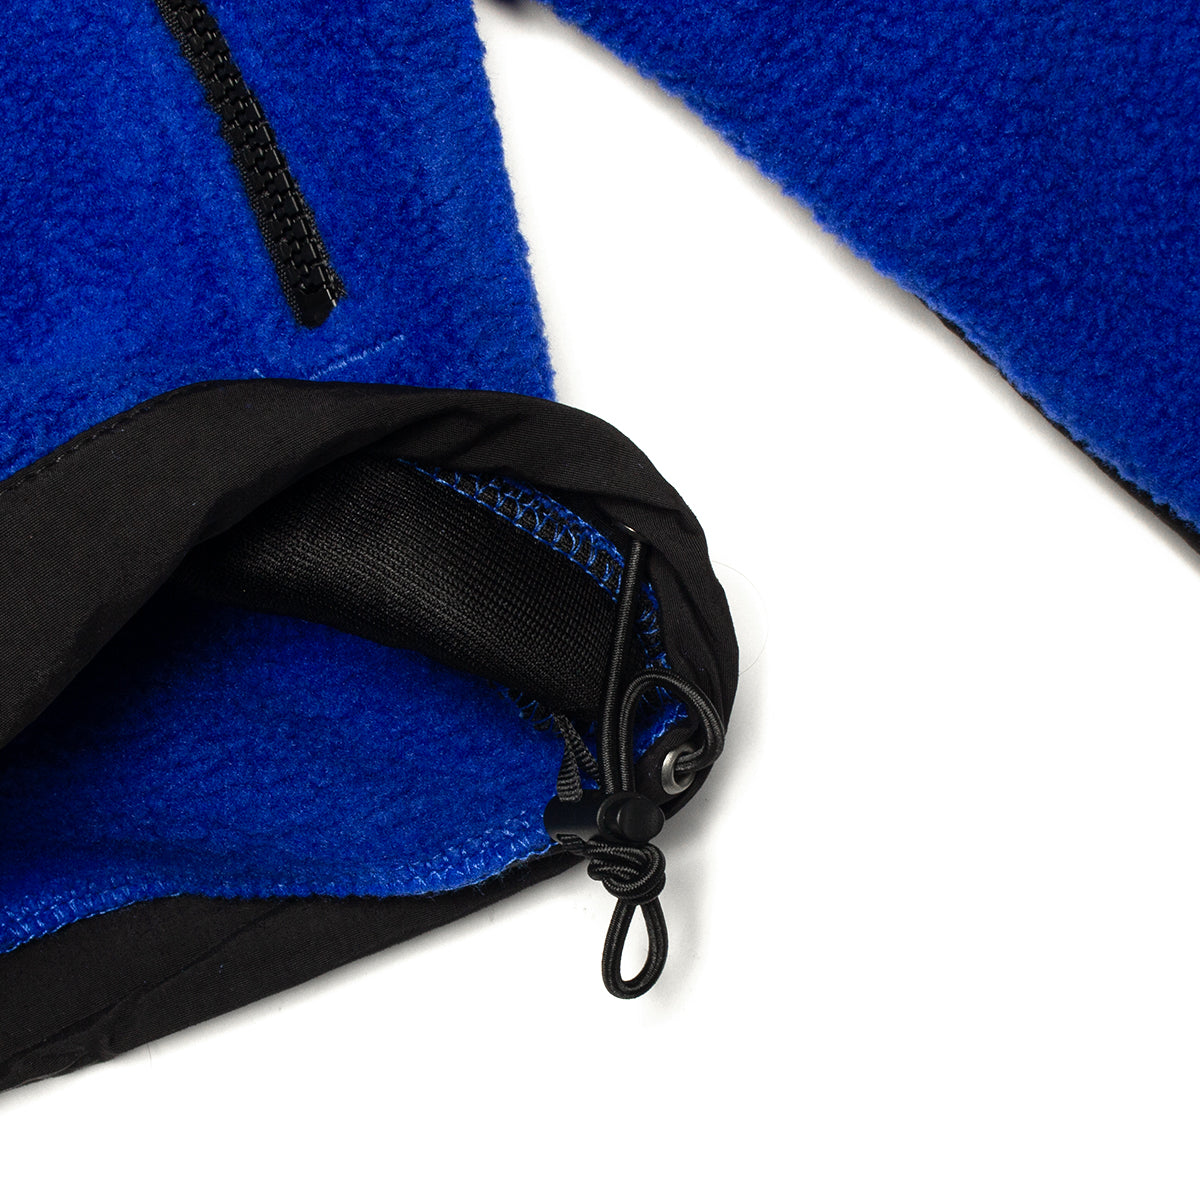 The North Face | Retro Denali Jacket Style # NF0A88XHEF11 Color : TNF Blue / TNF Black